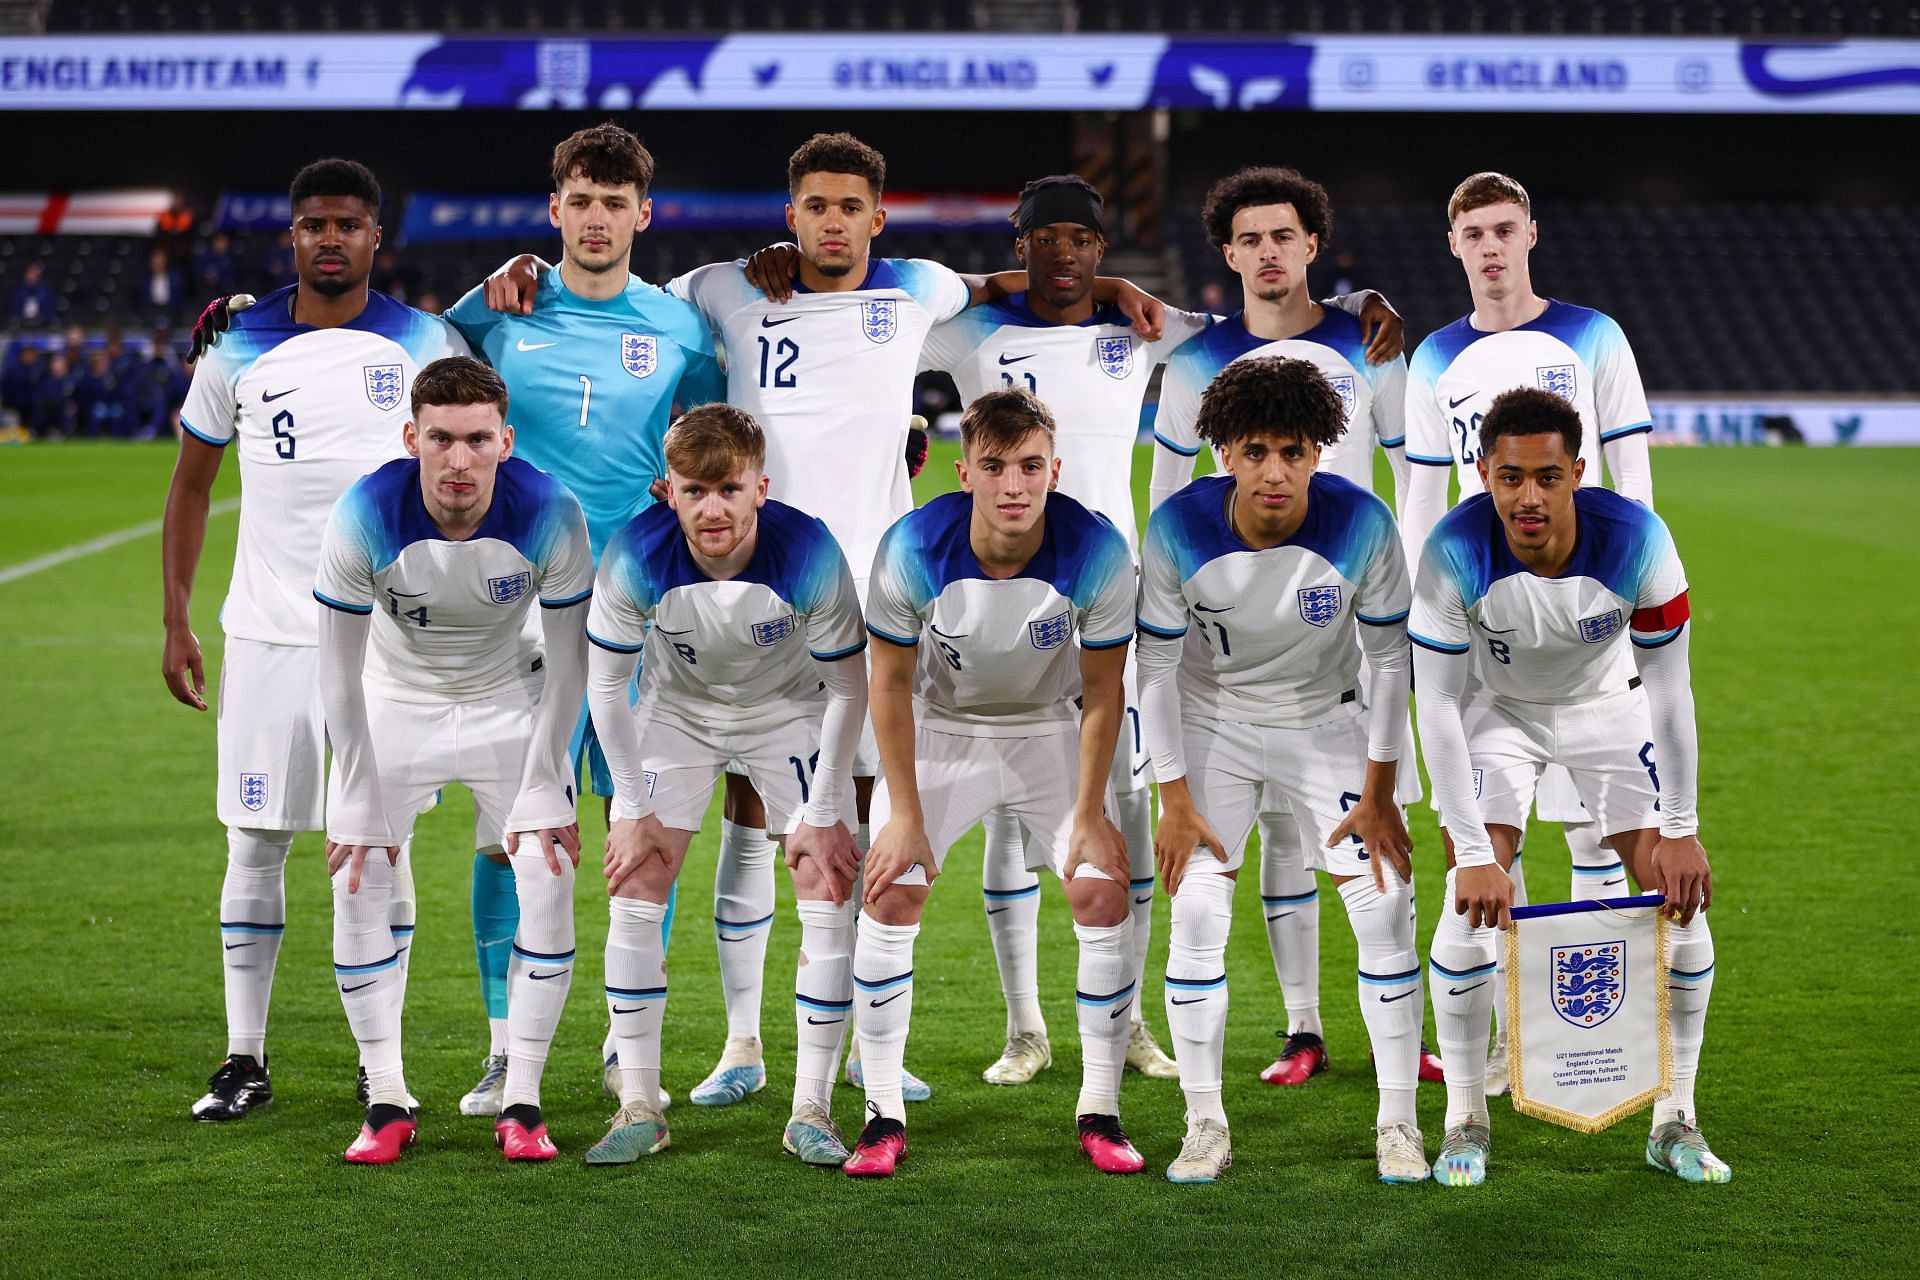 England U21 beat France U21 4-0 but lost 2-1 to Croatia U21.